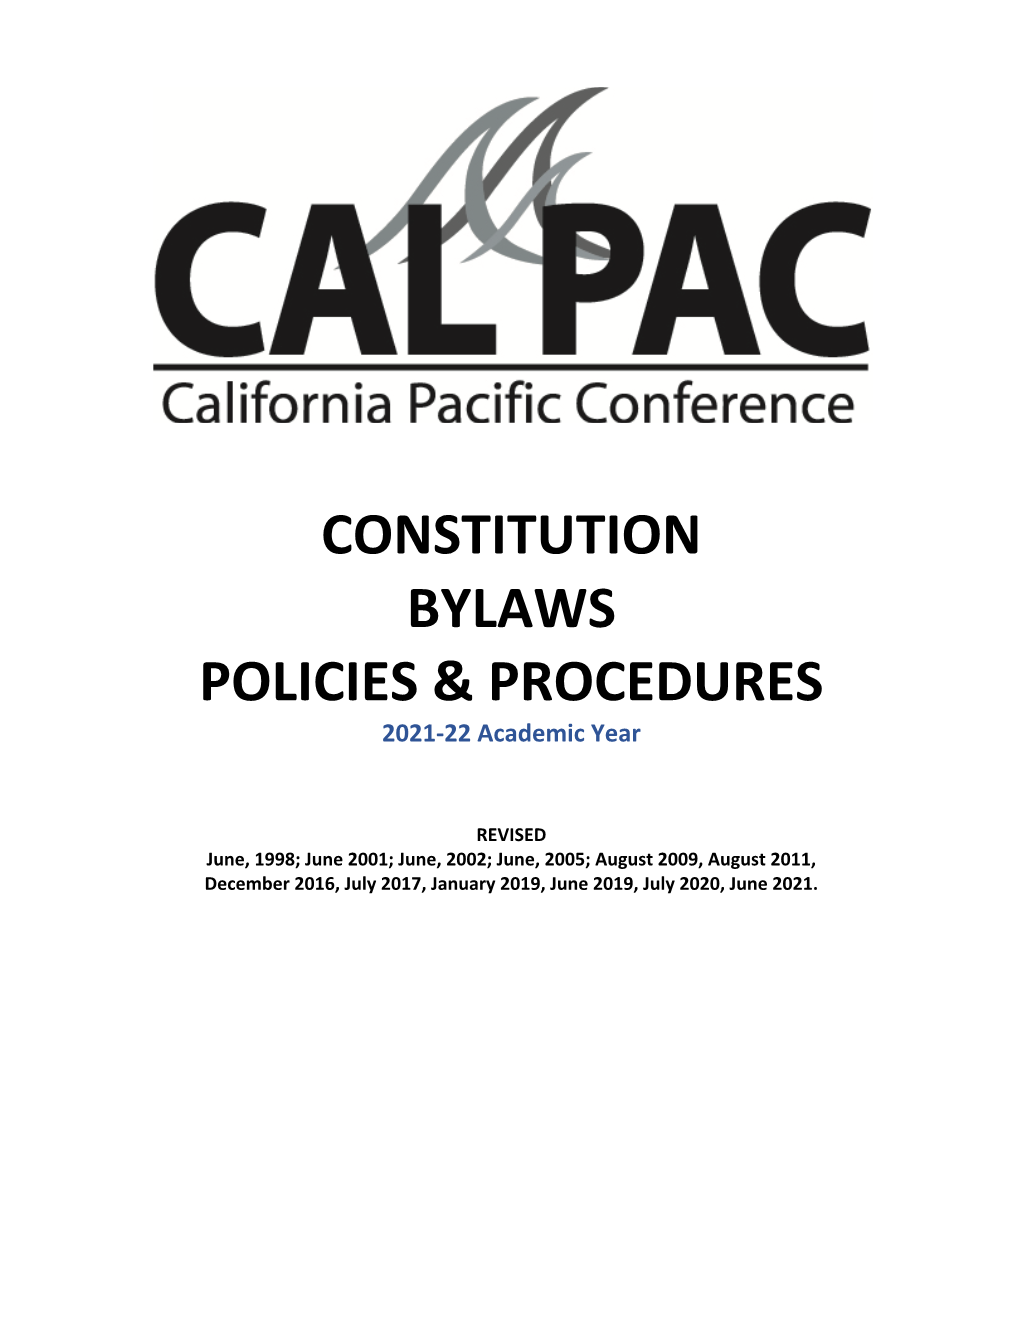 Constitution Bylaws Policies & Procedures